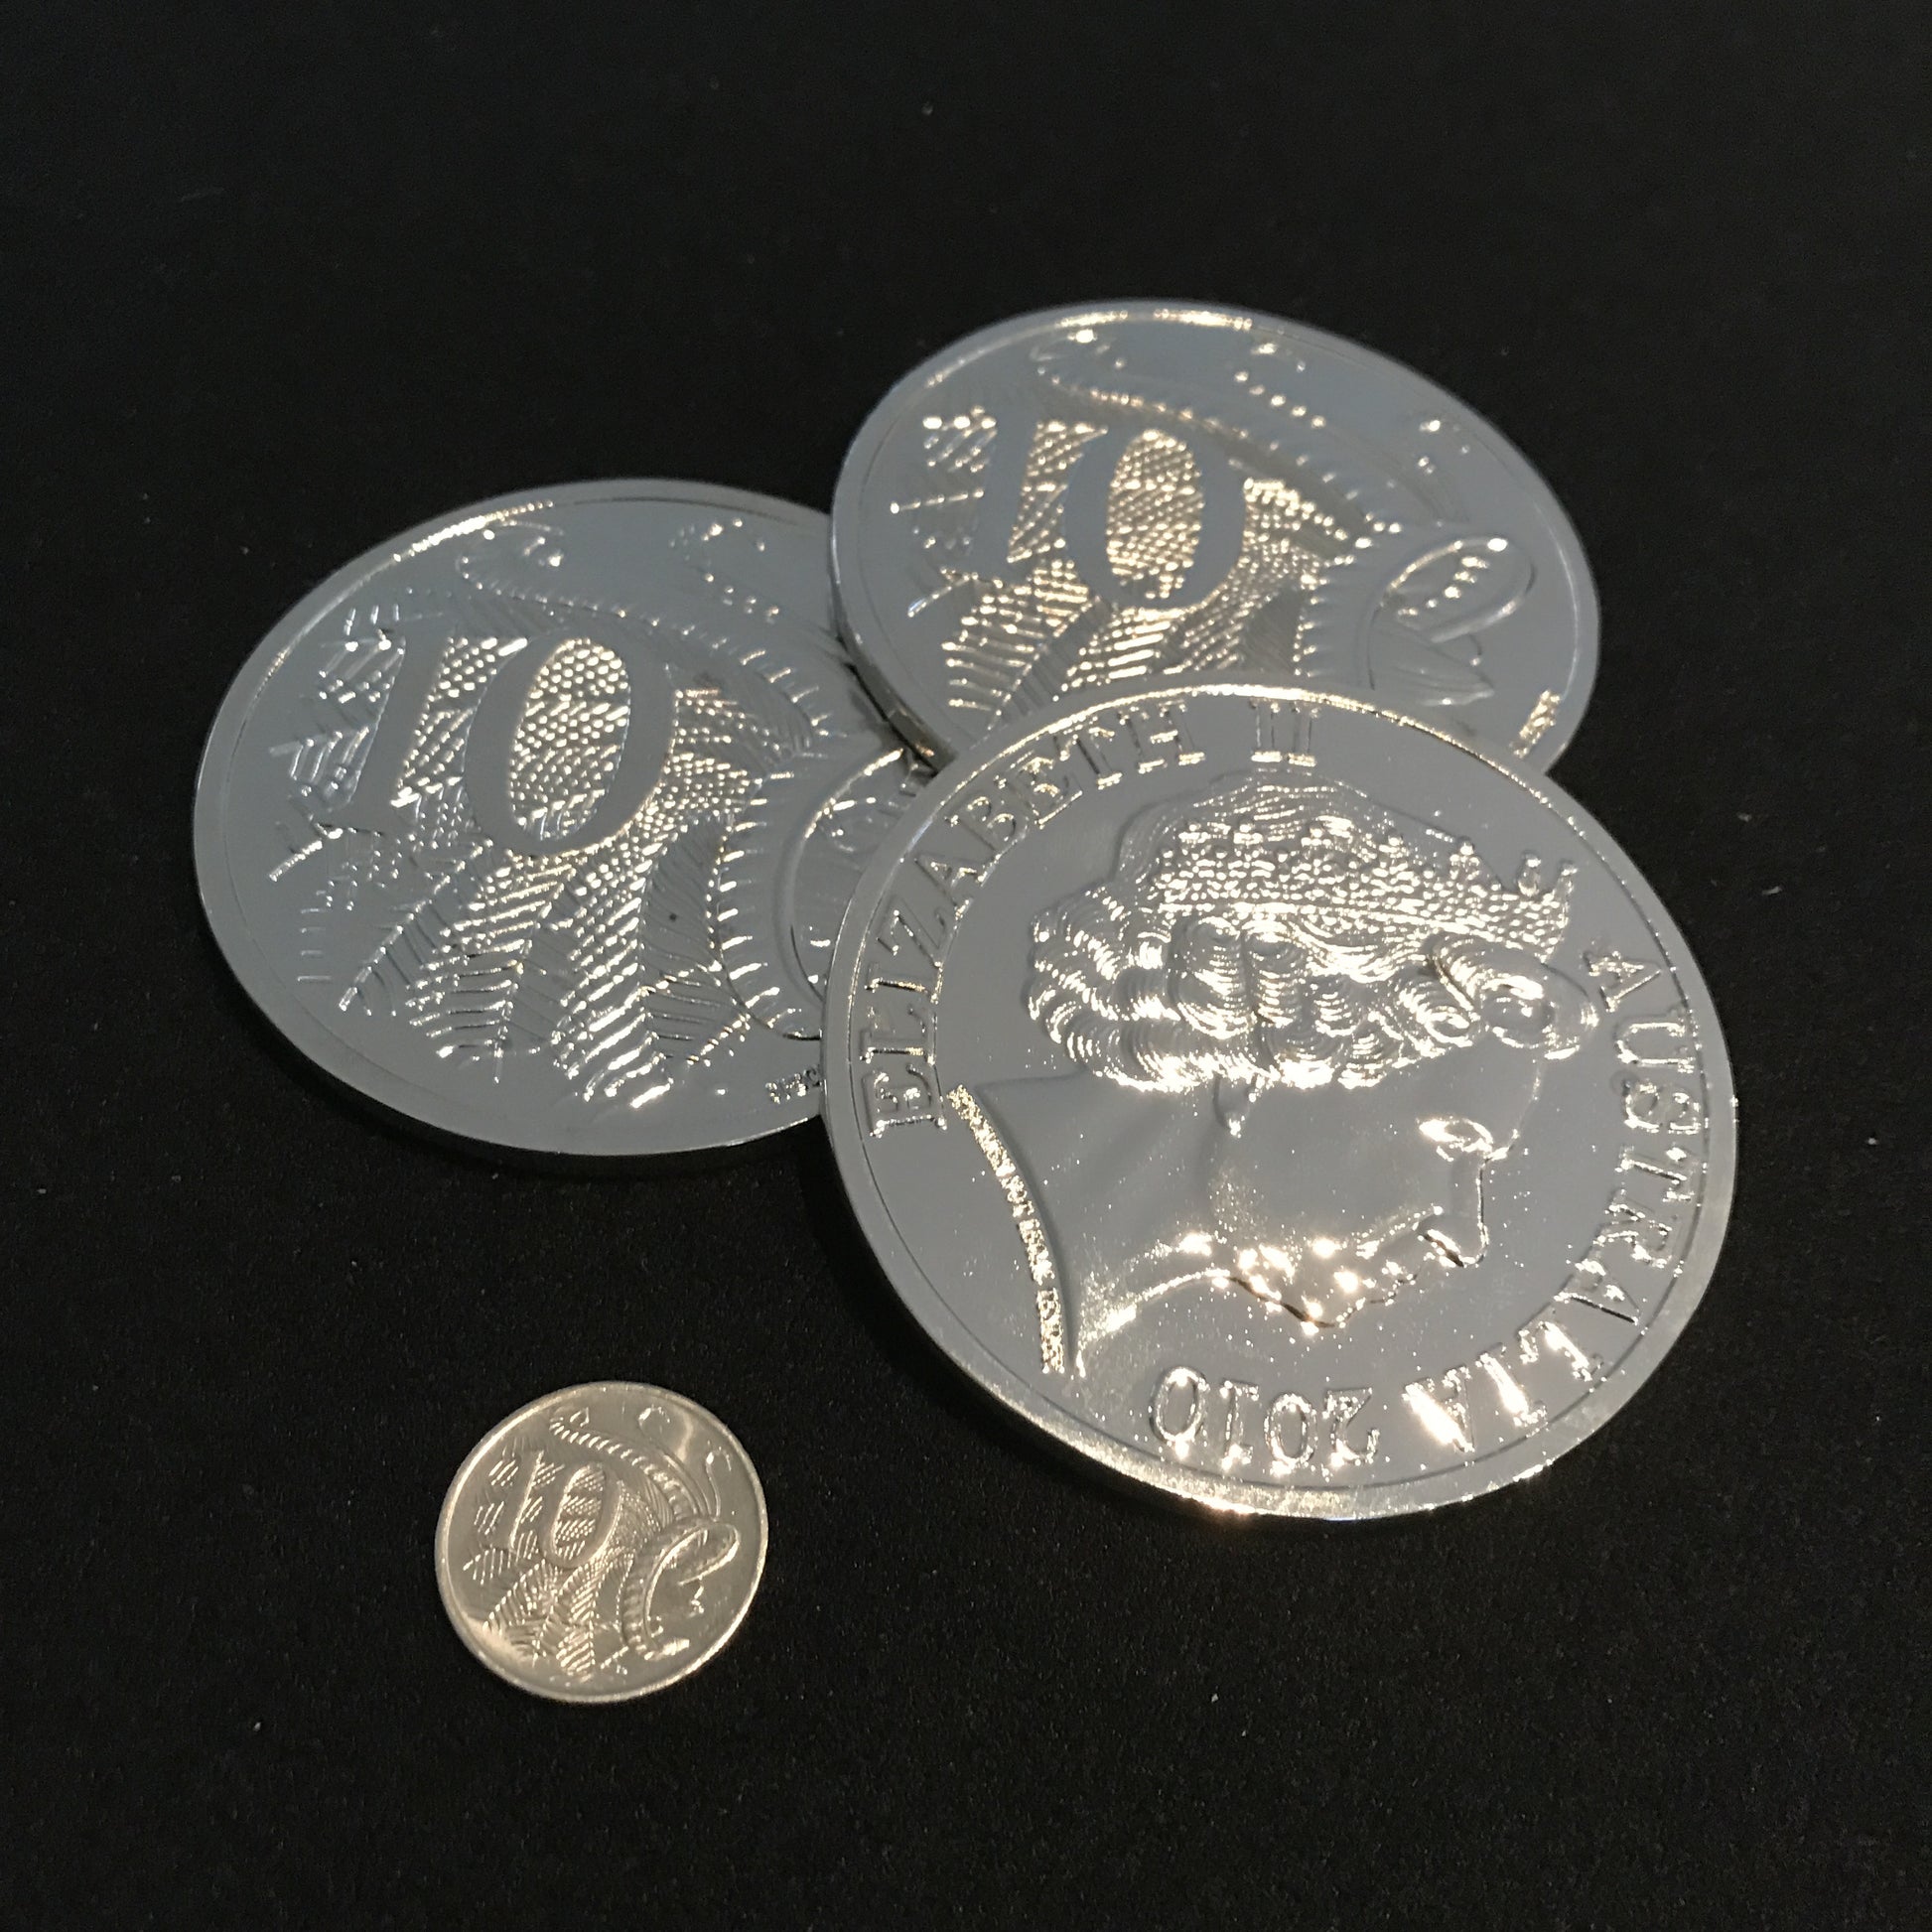 Jumbo Coin - Australian 10c (7.5cm/3inch) - Available at pipermagic.com.au